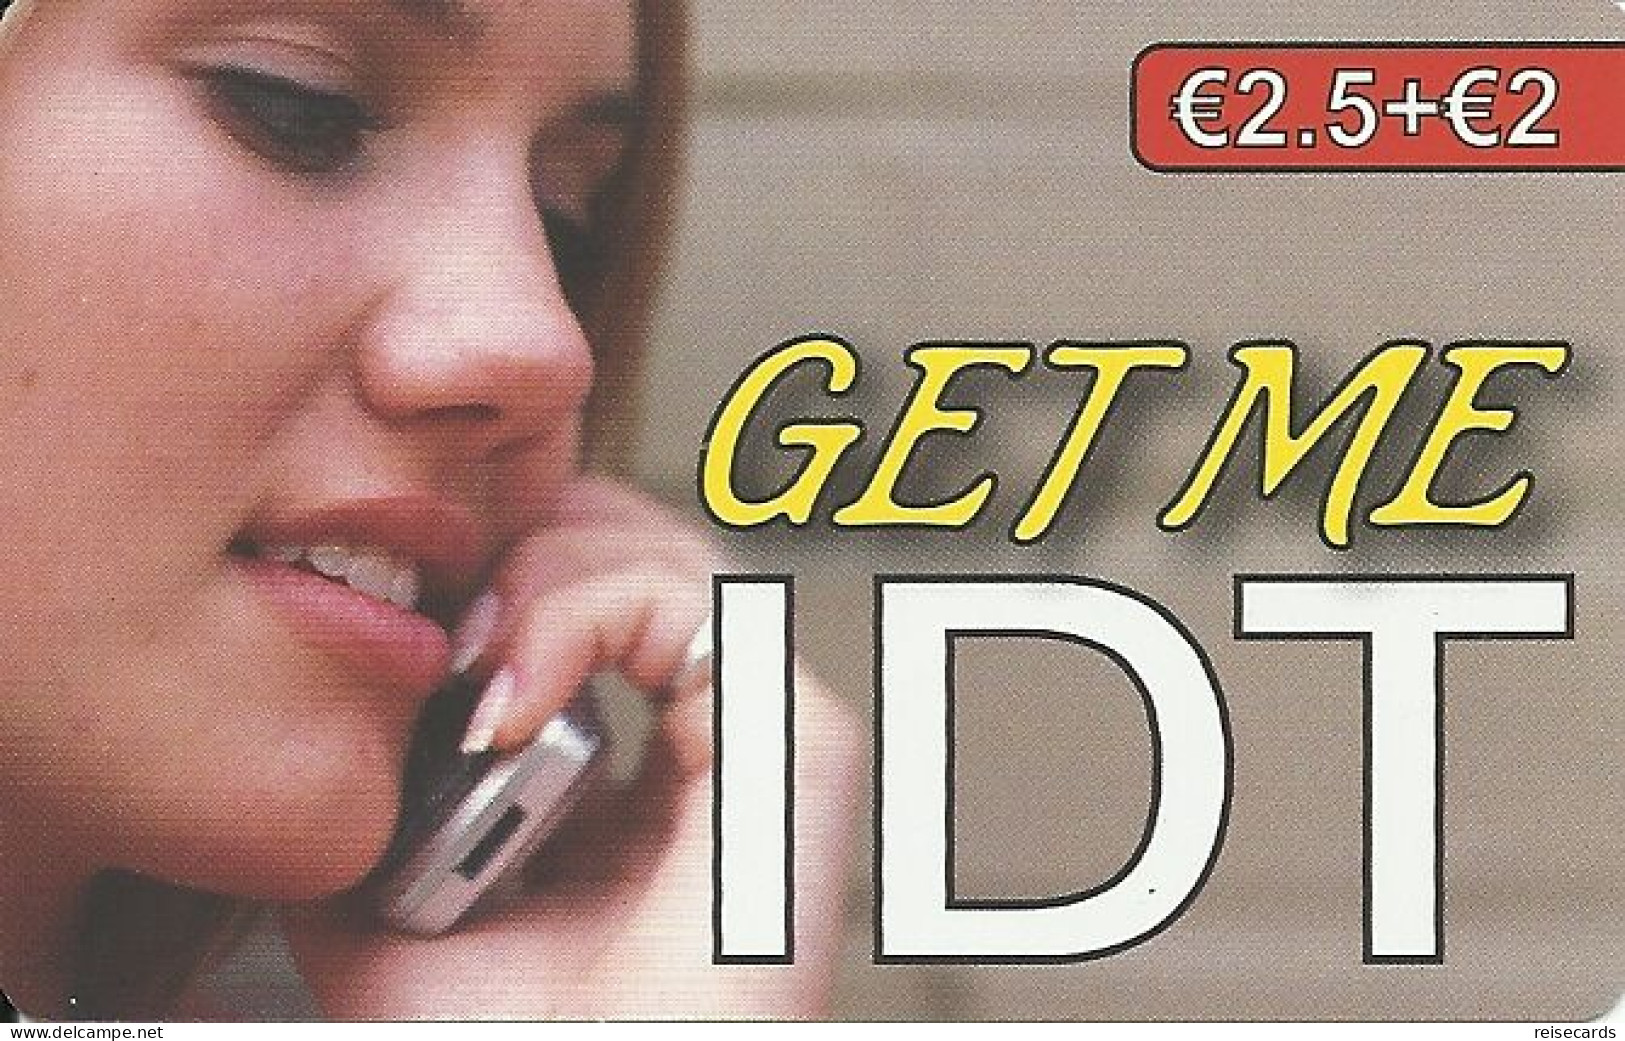 Germany: Prepaid IDT Get Me - Cellulari, Carte Prepagate E Ricariche